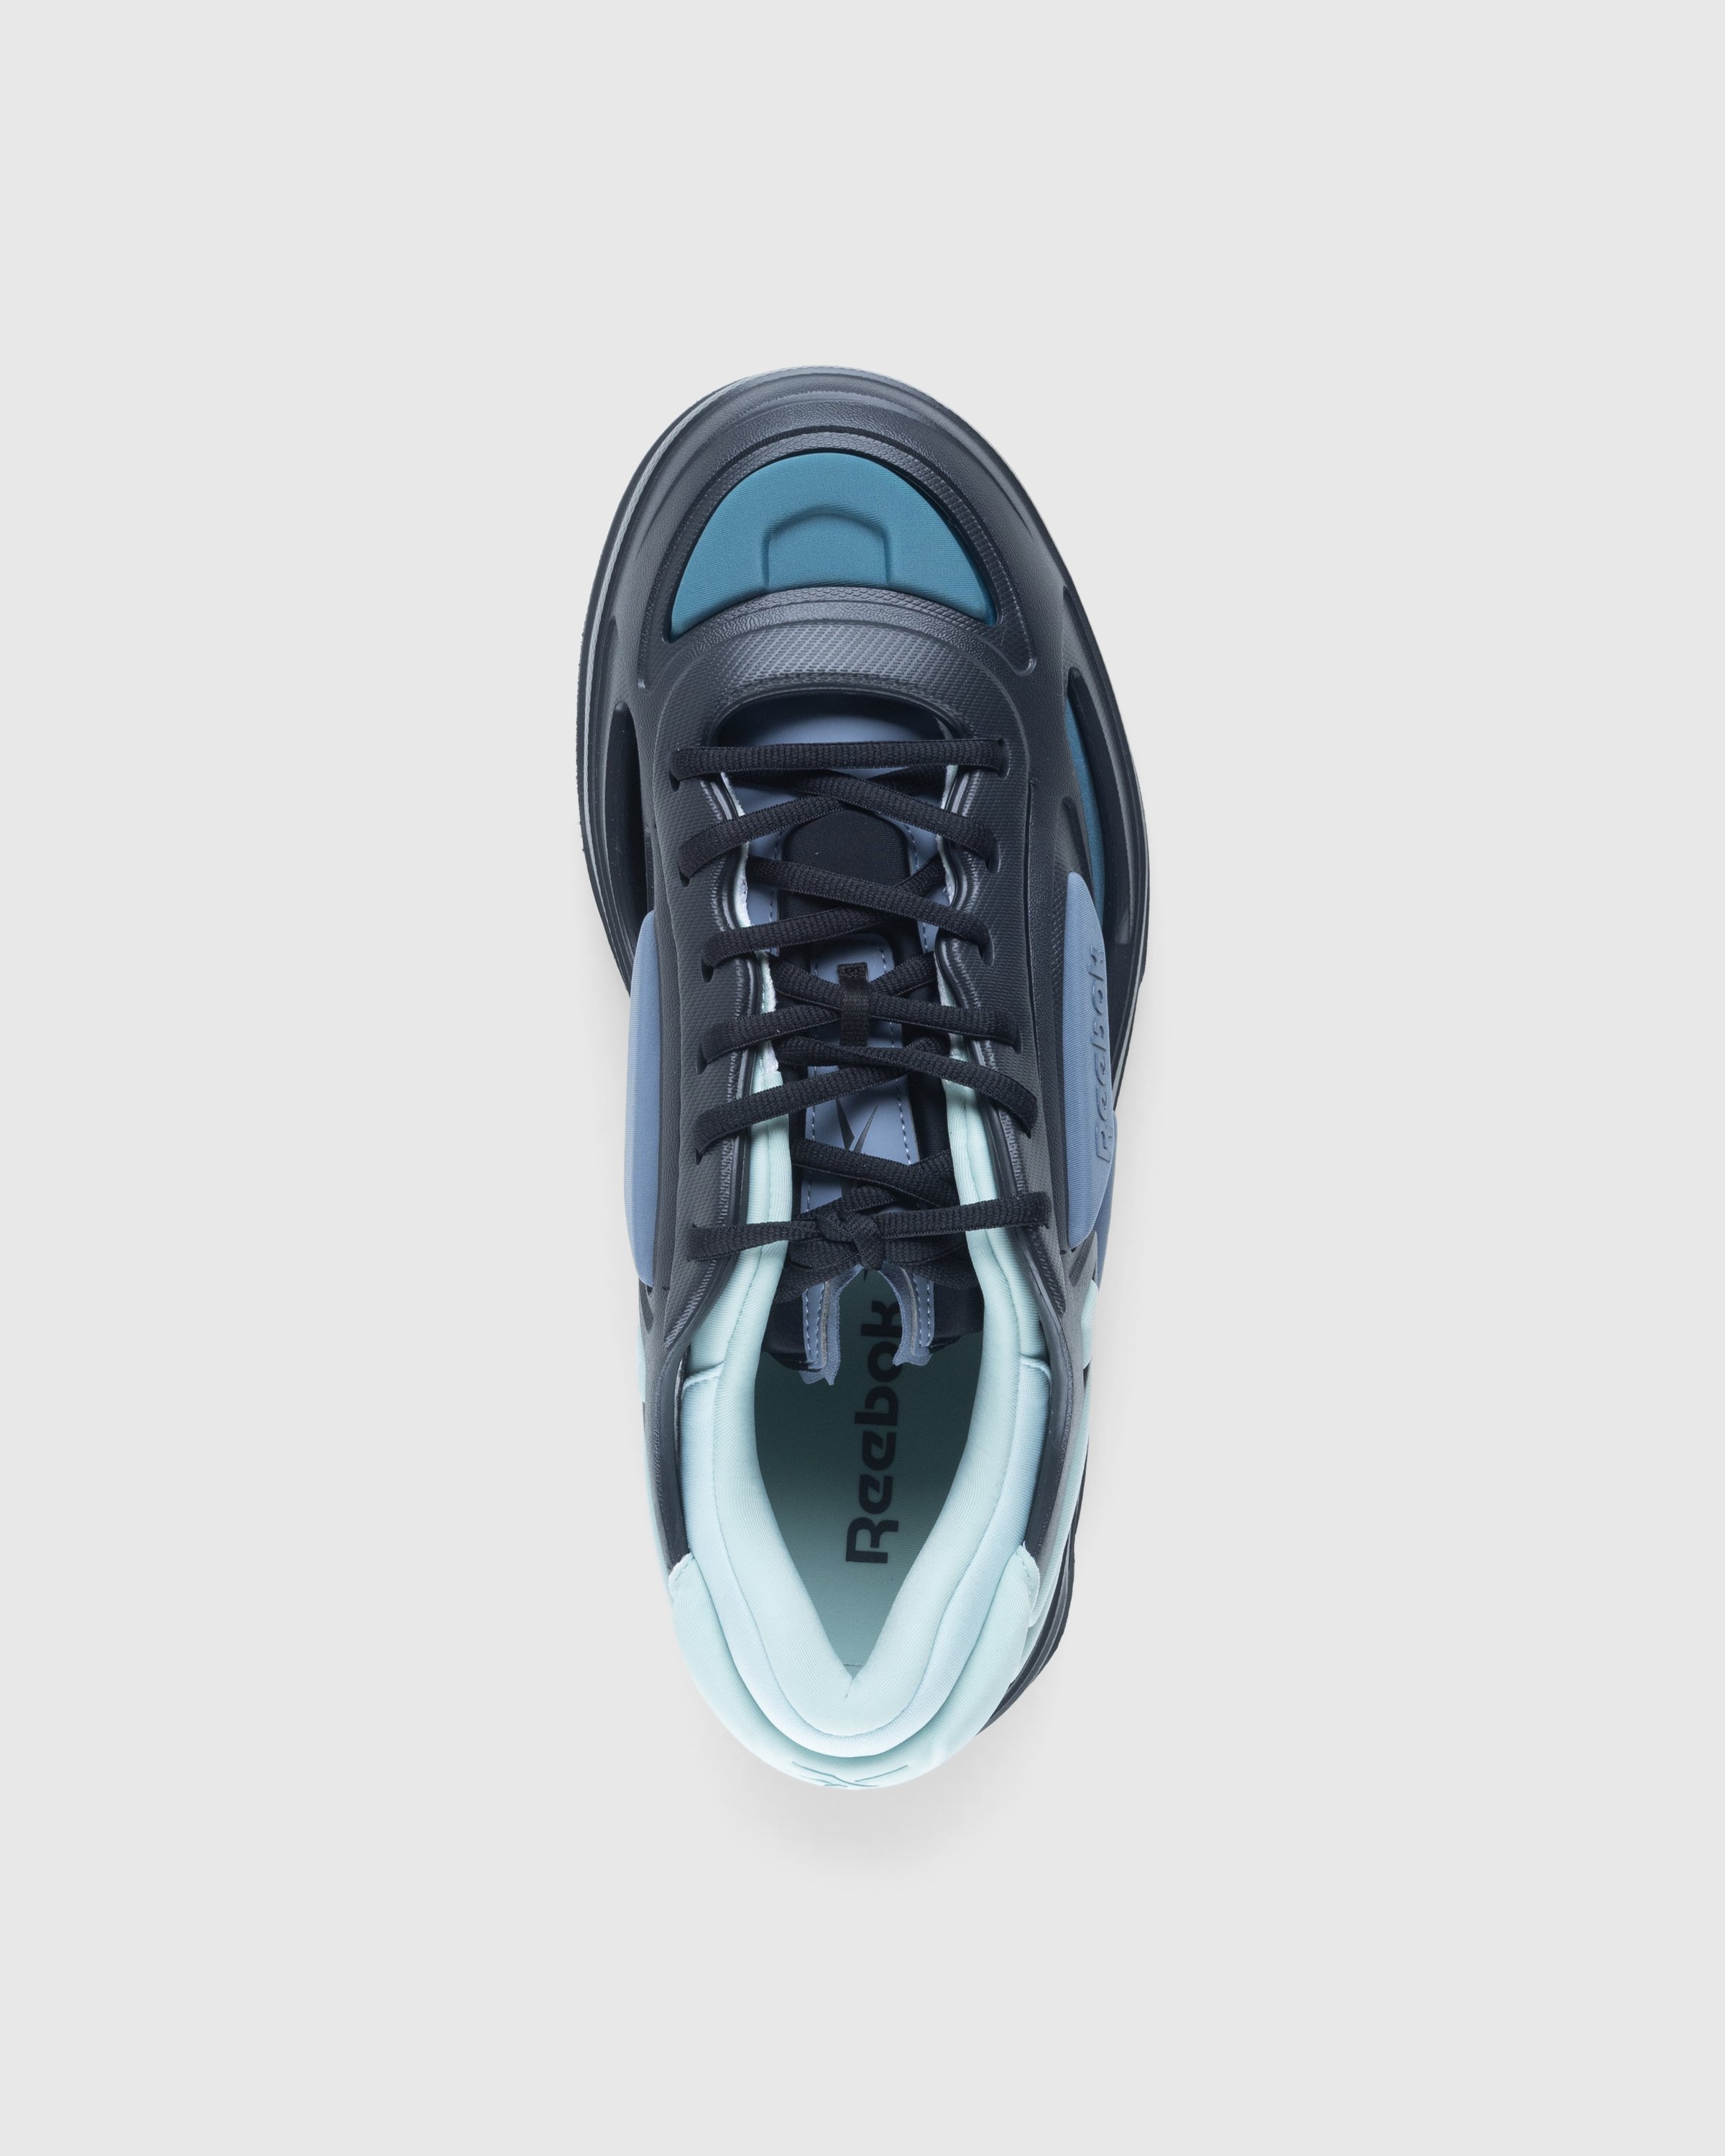 Reebok - Future Club C Black/Dusty Blue - Footwear - Multi - Image 5